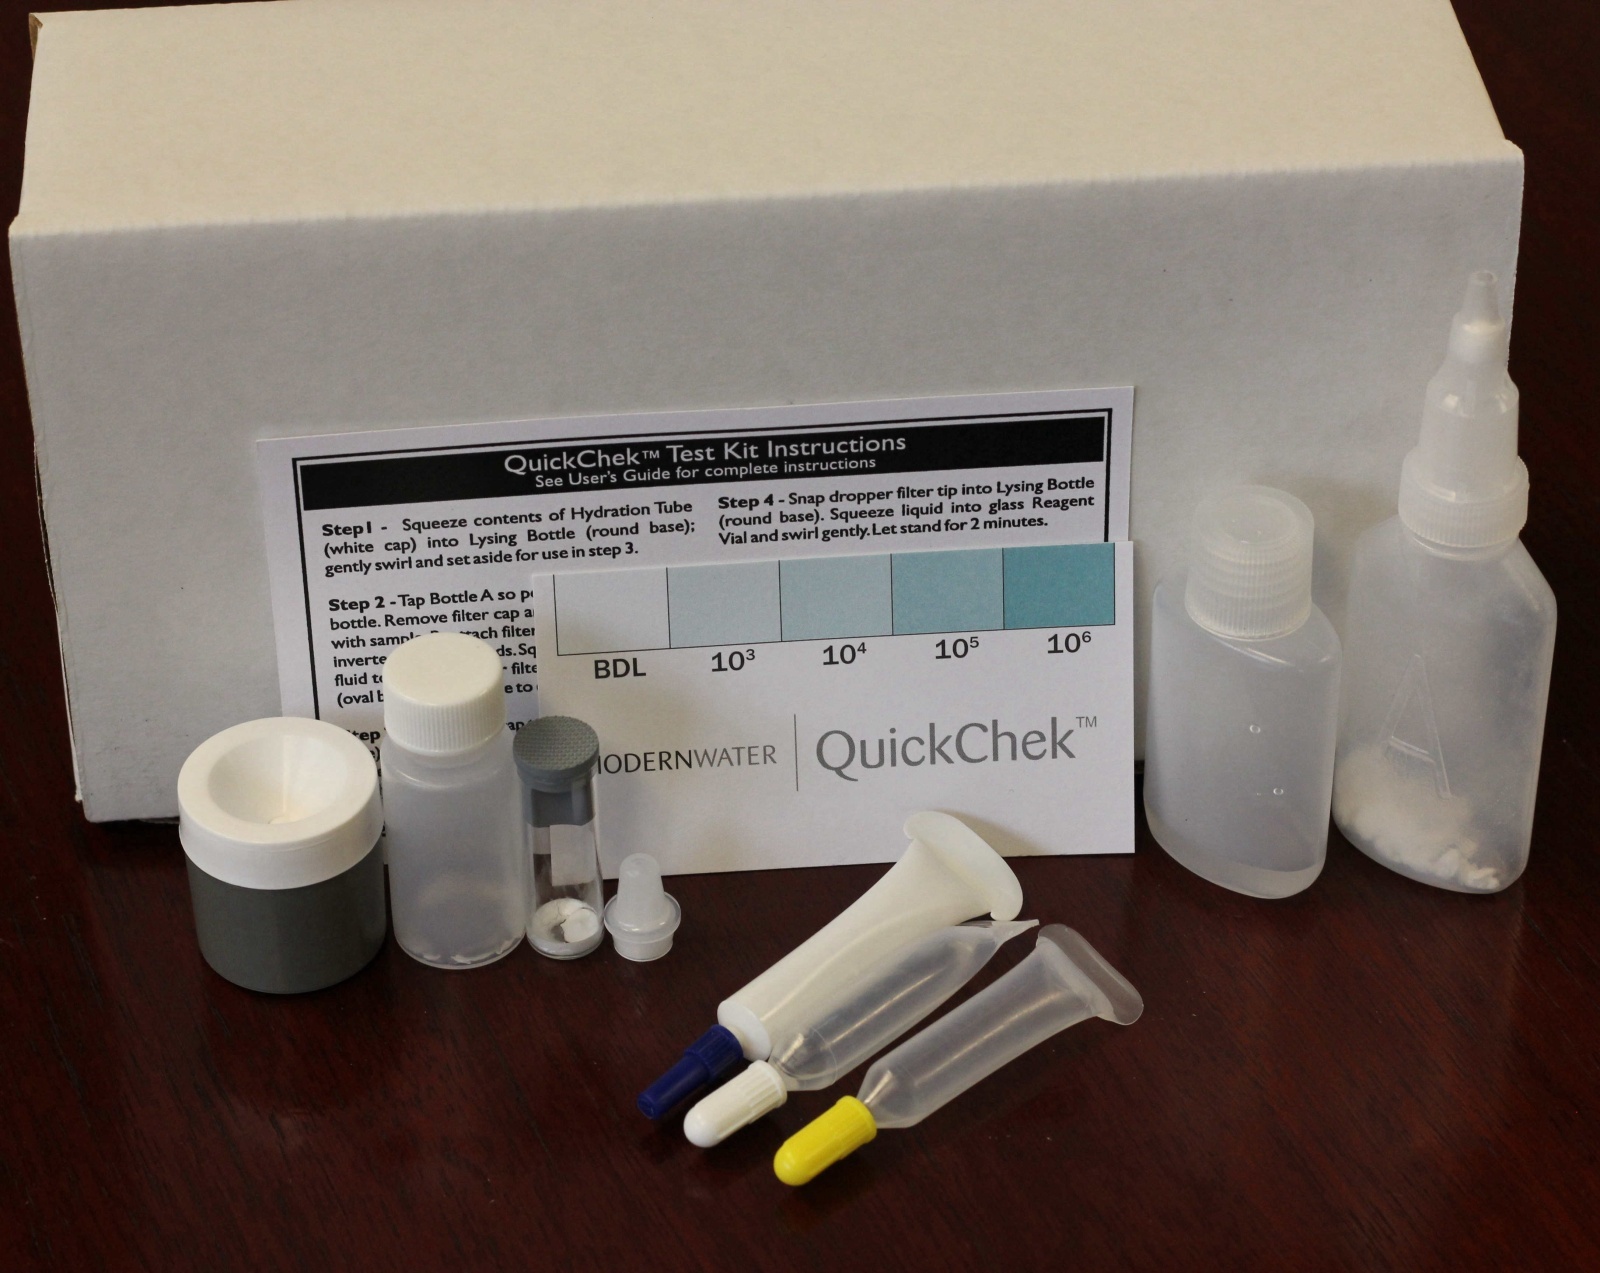 Modern Water QuickChek SRB硫酸盐还原菌检测系统的图片